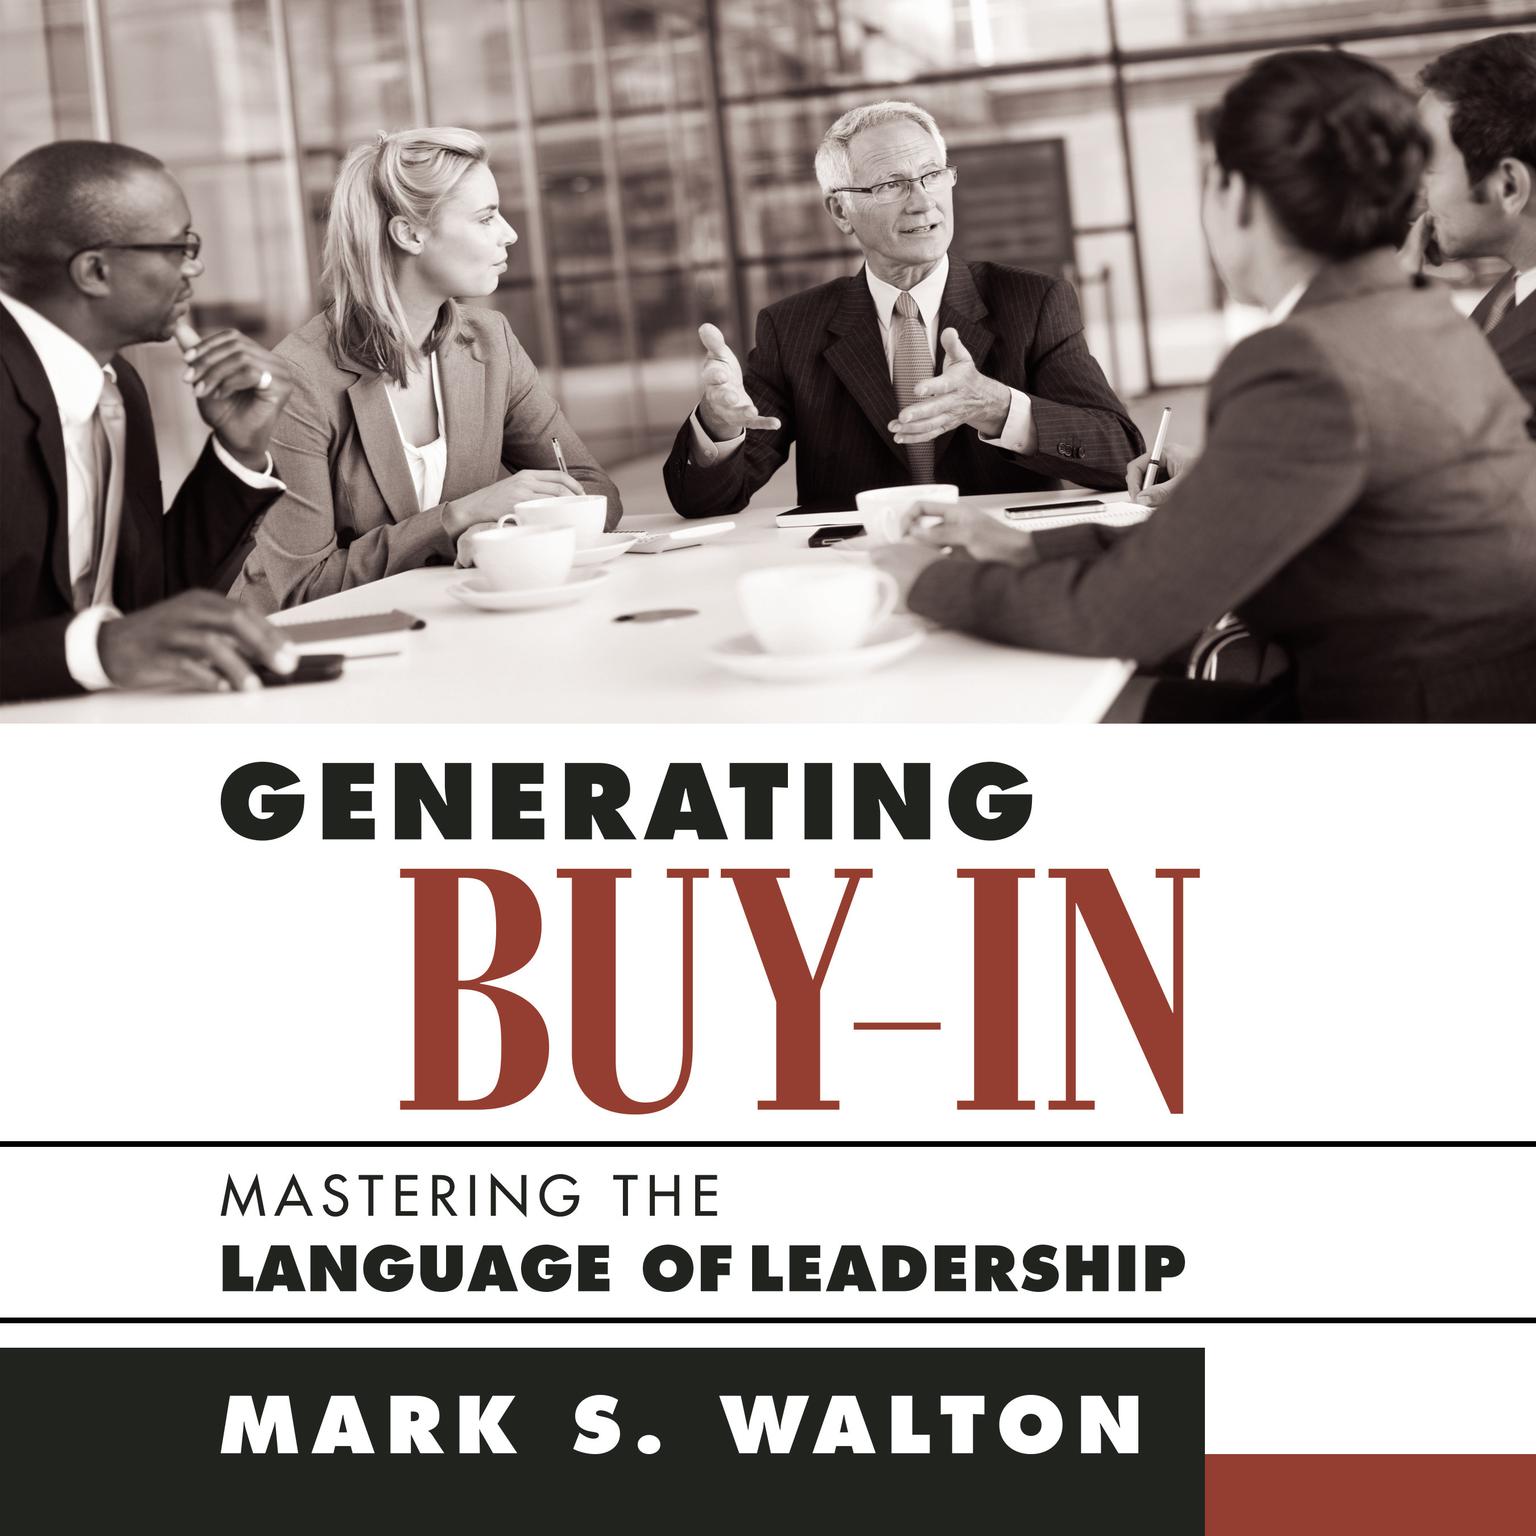 Generating Buy-In: Mastering the Language of Leadership Audiobook, by Mark S. Walton